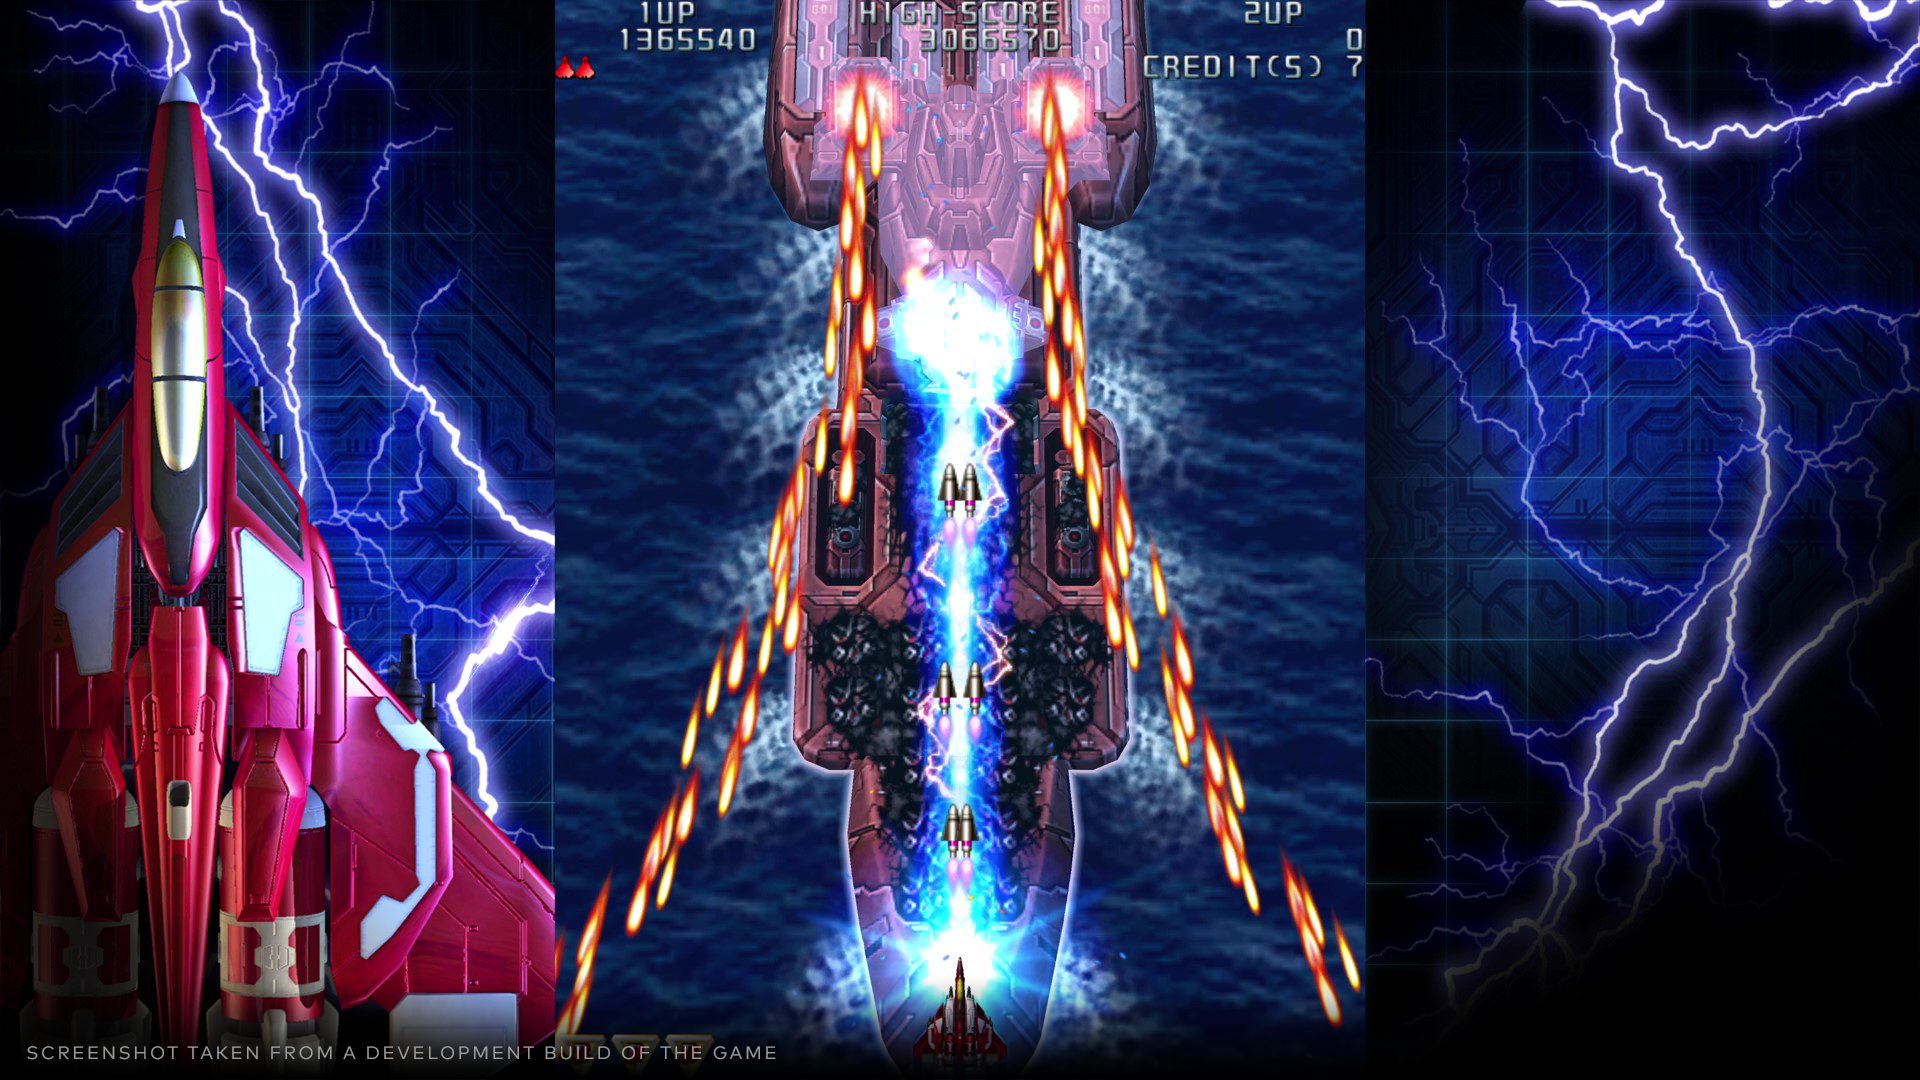 Raiden III x [PlayStation Edition MIKADO Deluxe - MANIAX 5